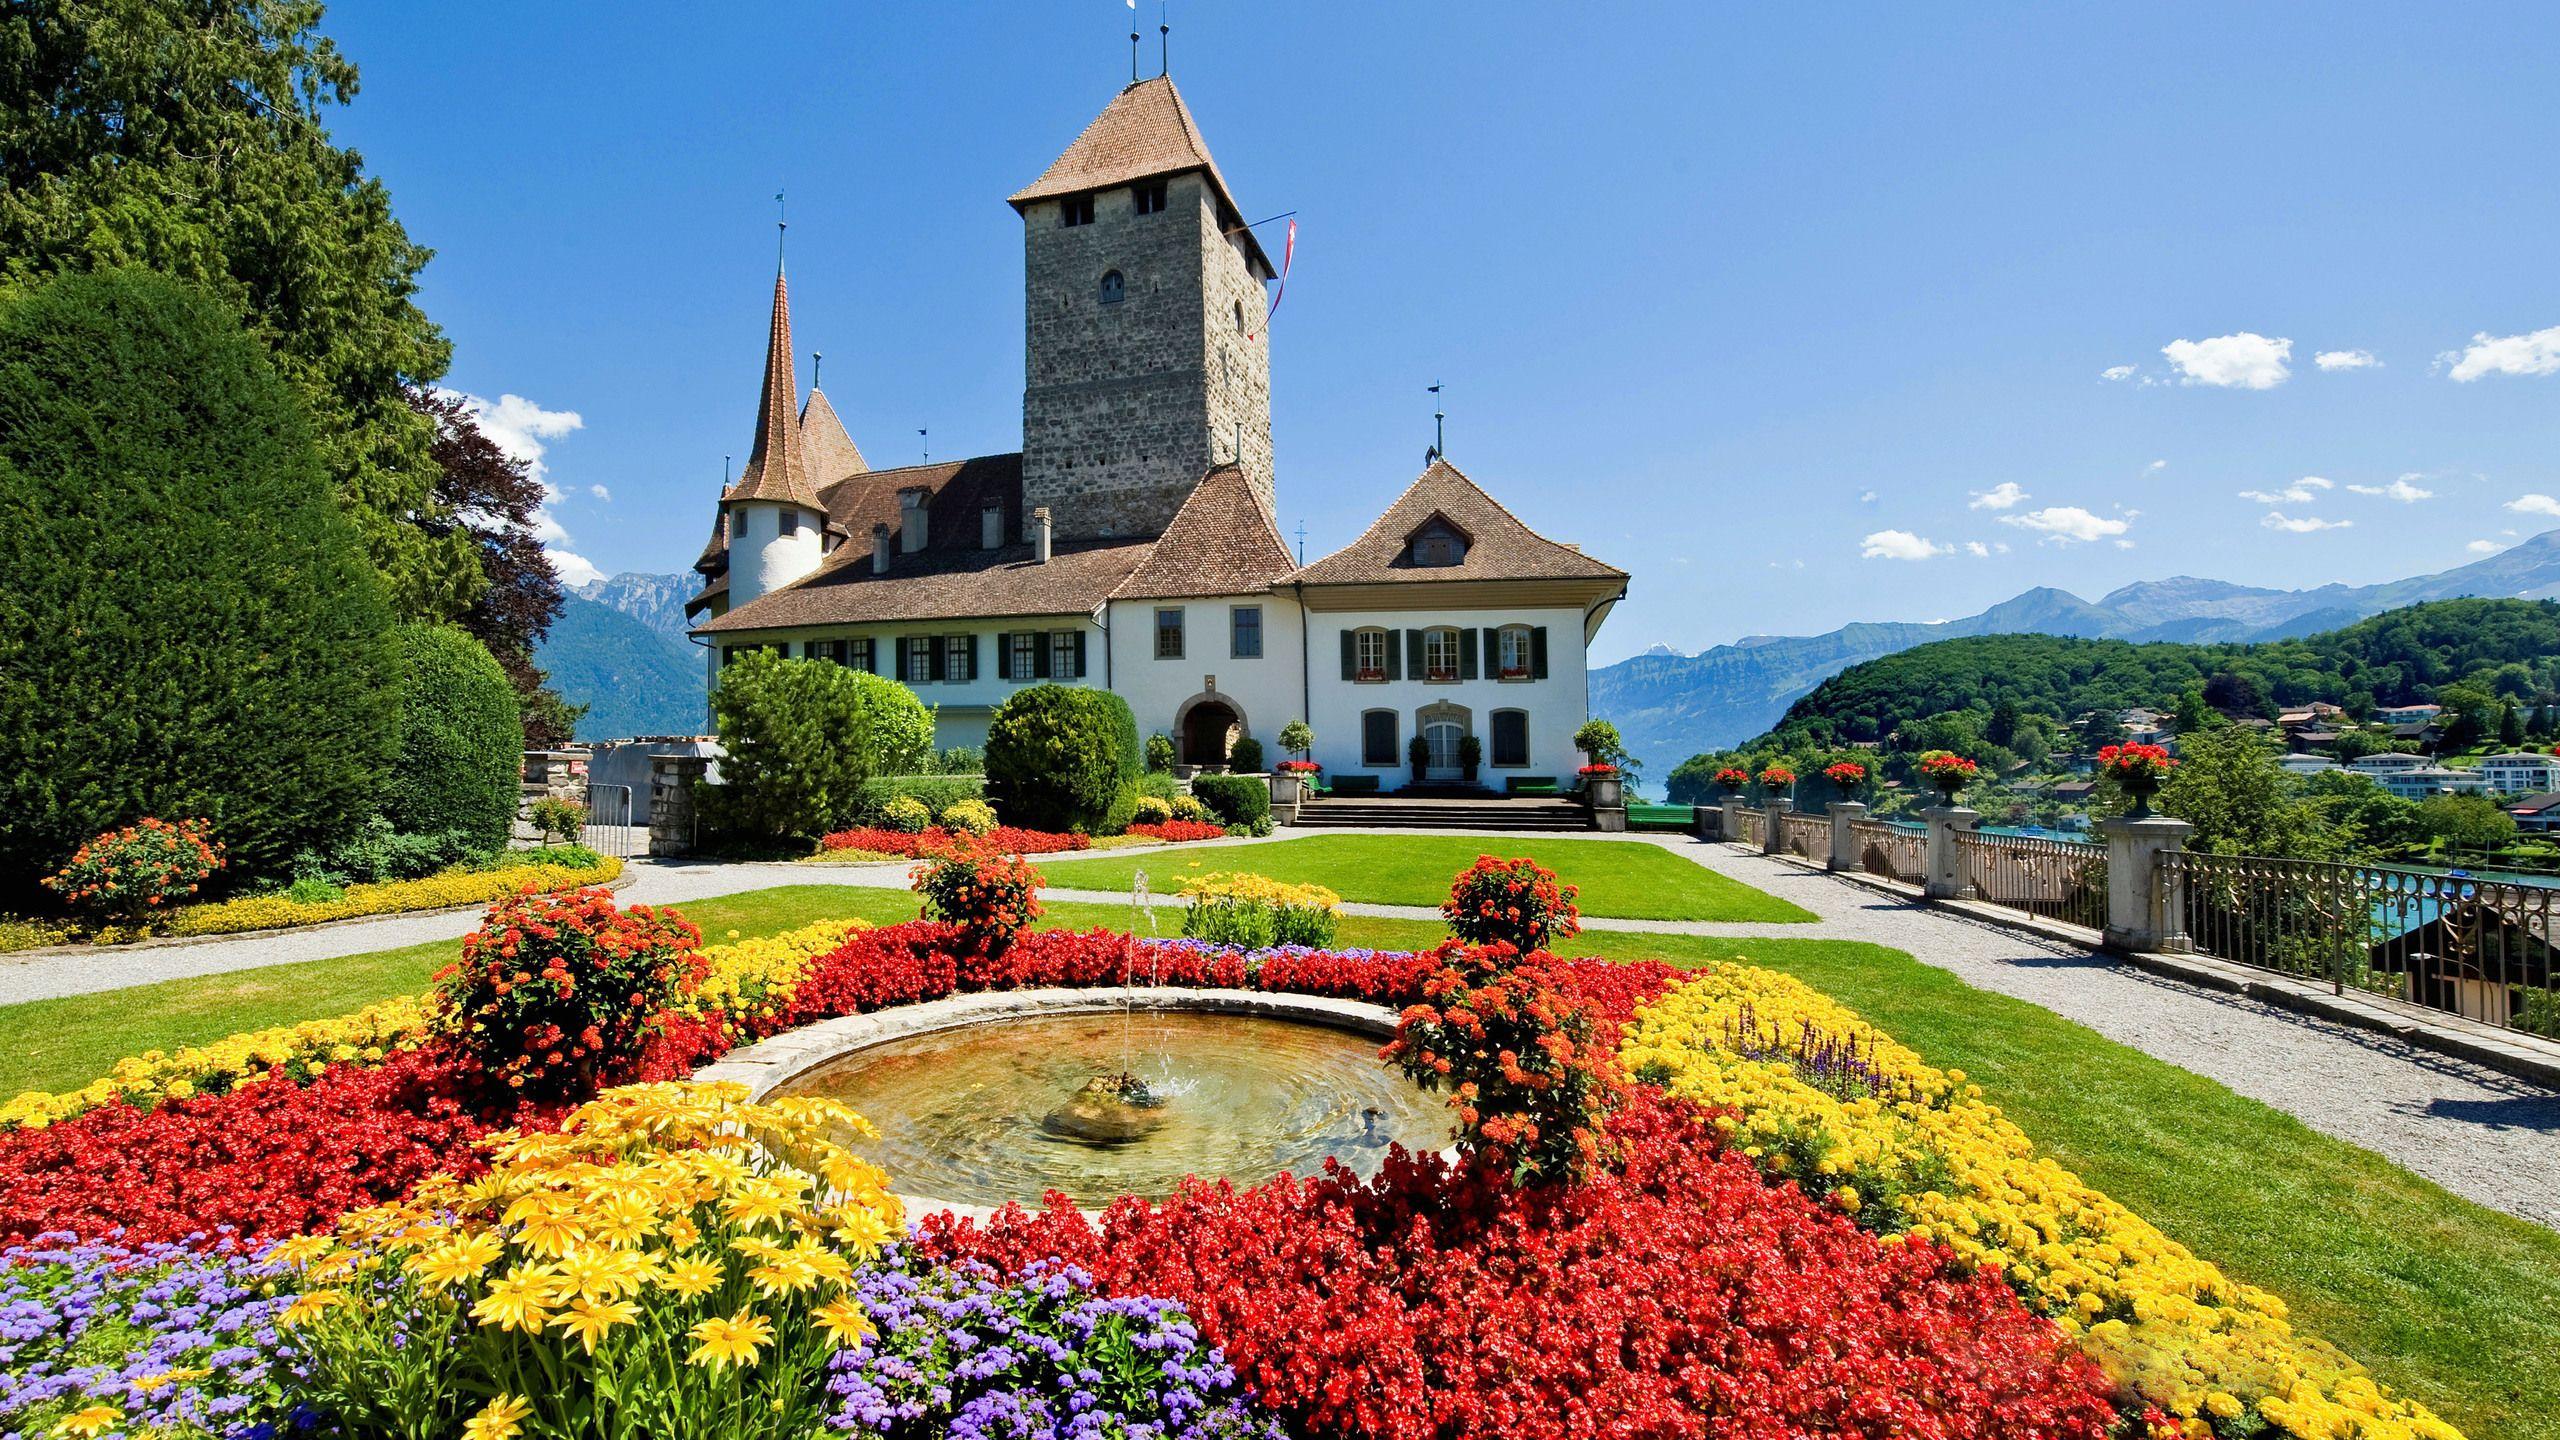 Spiez Castle in Switzerland Full HD Wallpaper and Background